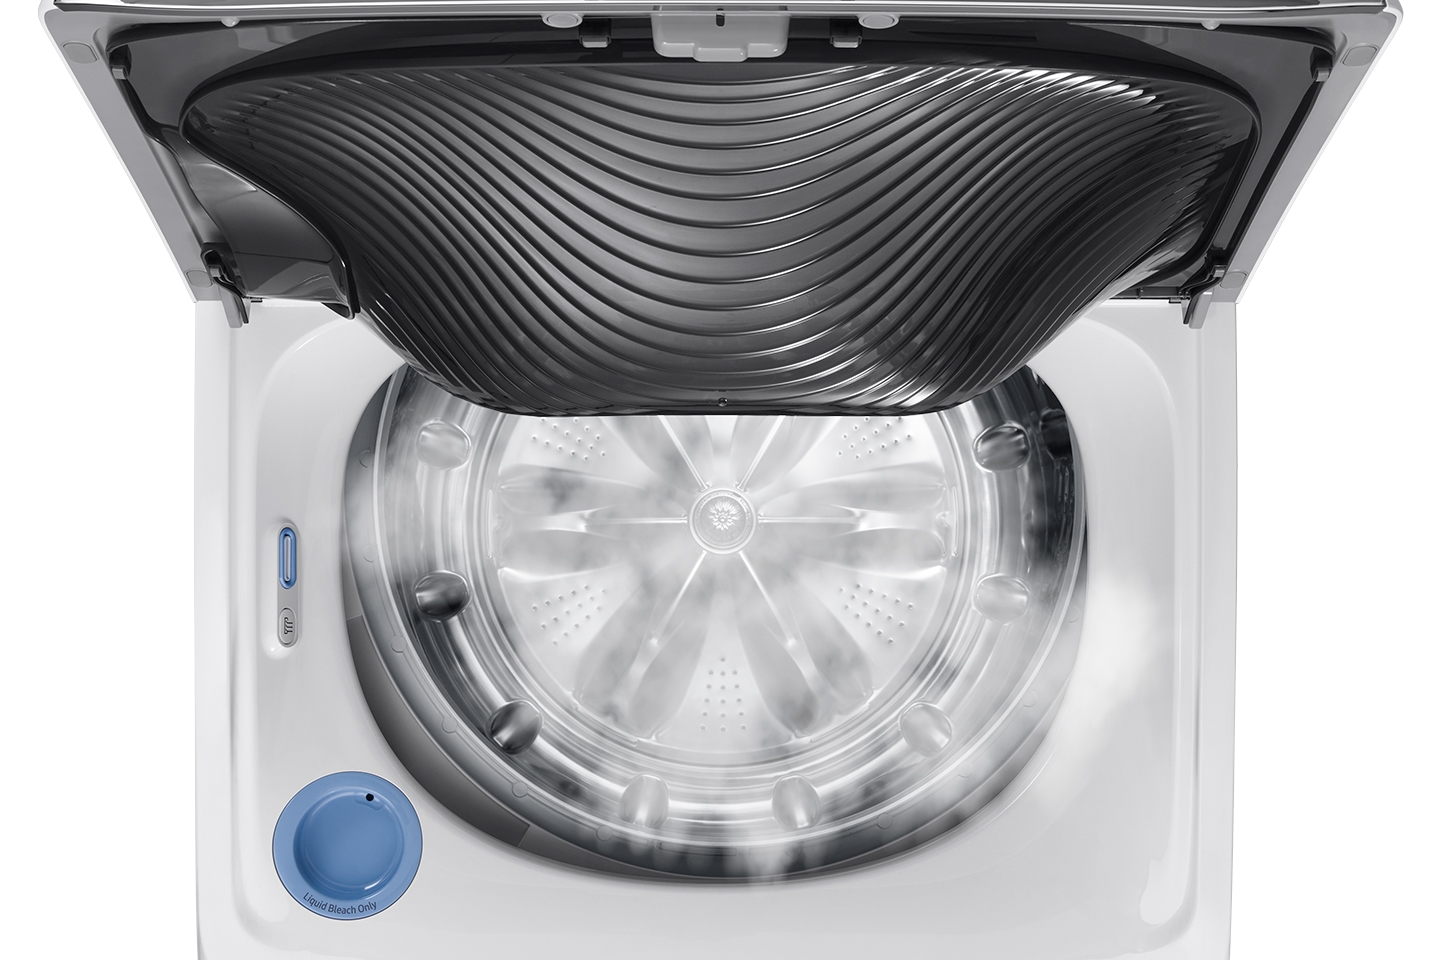 Samsung WA52M7750AV Top-Load Washer with Activewash - Reviewed